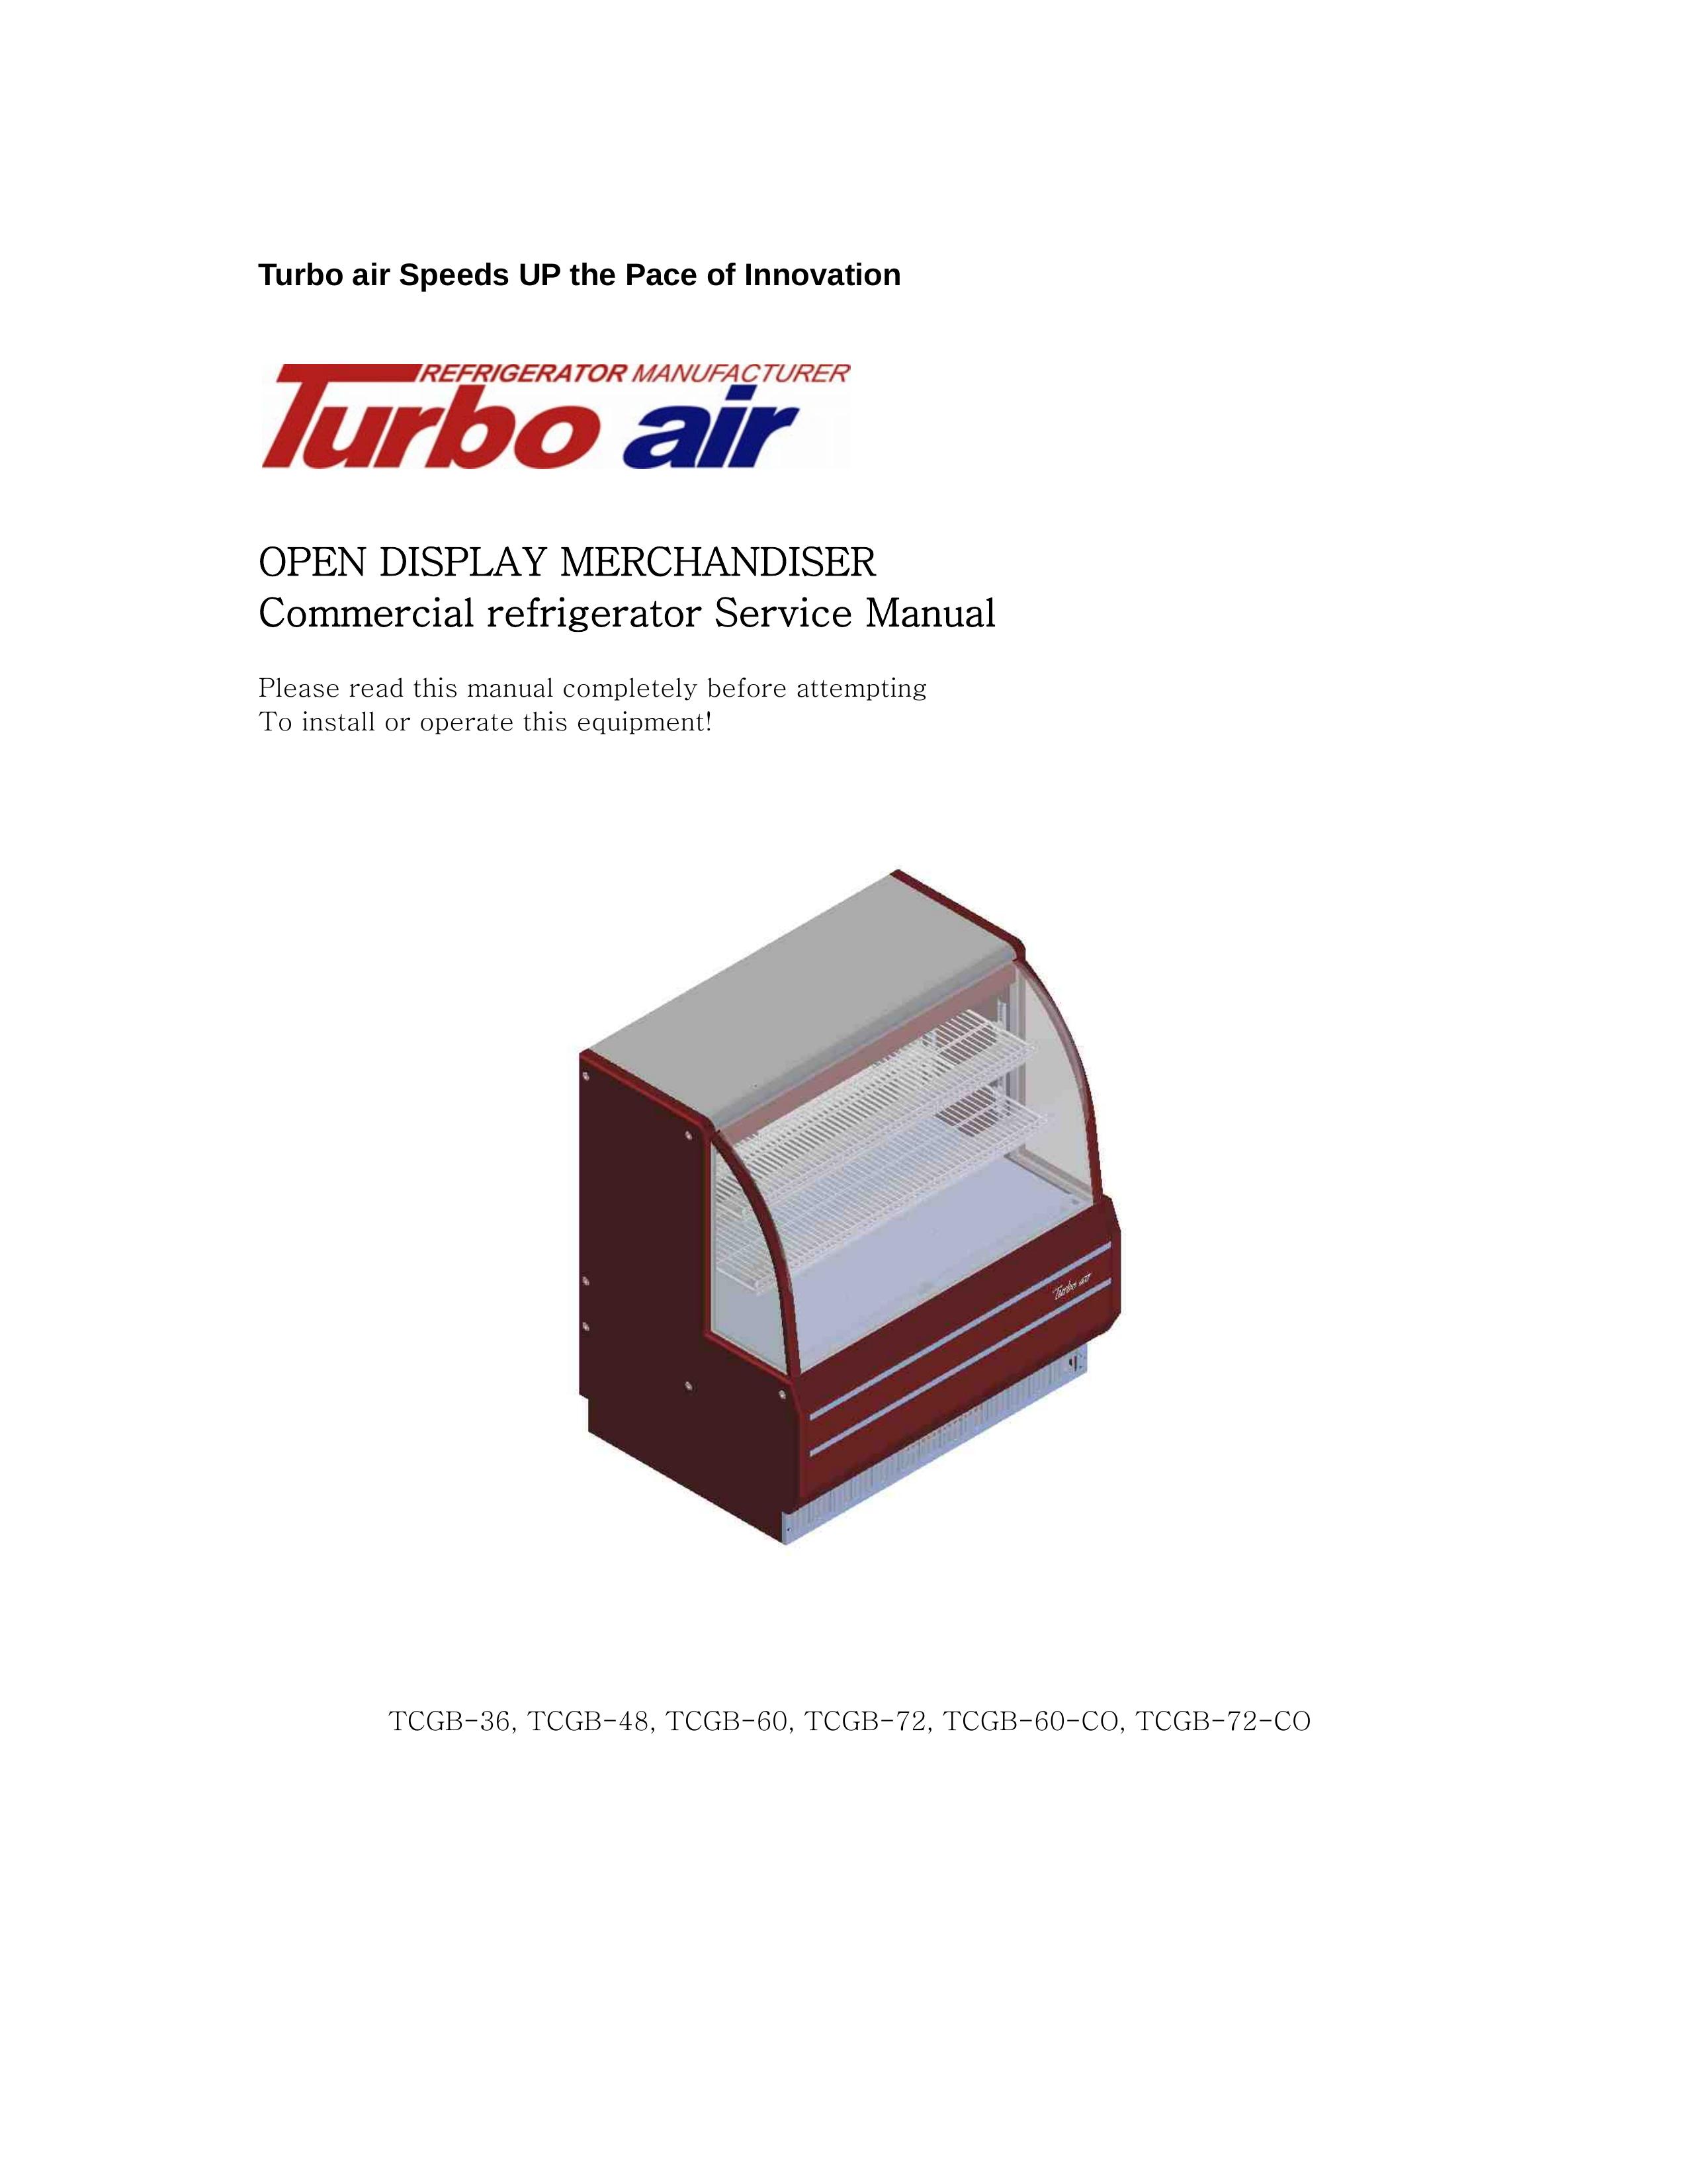 Turbo Air TCGB-36 Refrigerator User Manual